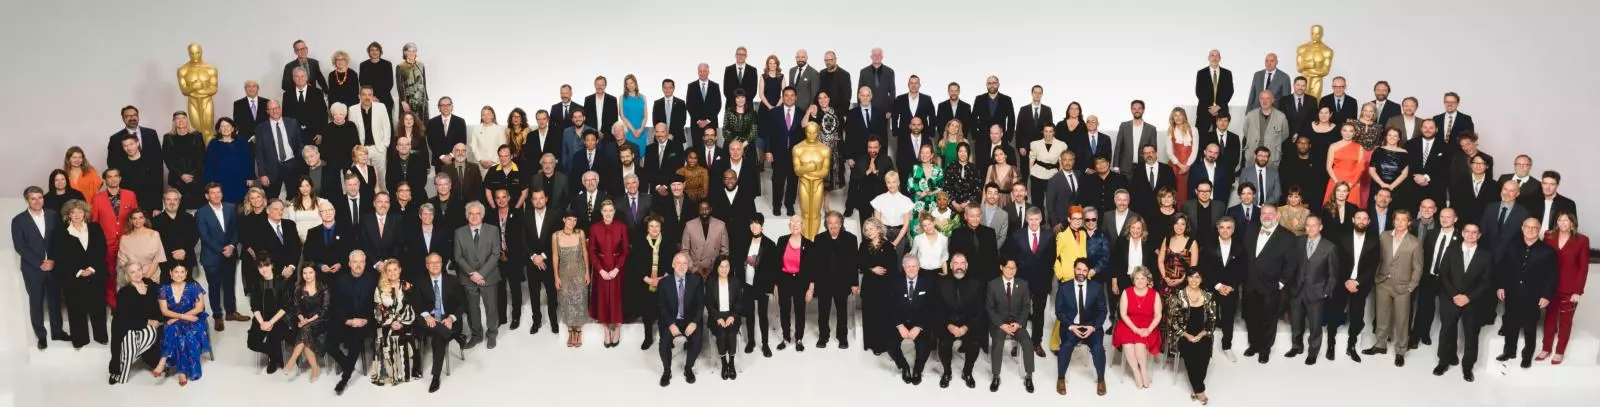 Rene Zellweger, Leonardo DiCaprio e outros no almorzo en honor dos nomeados de Oscar 2020 45645_17